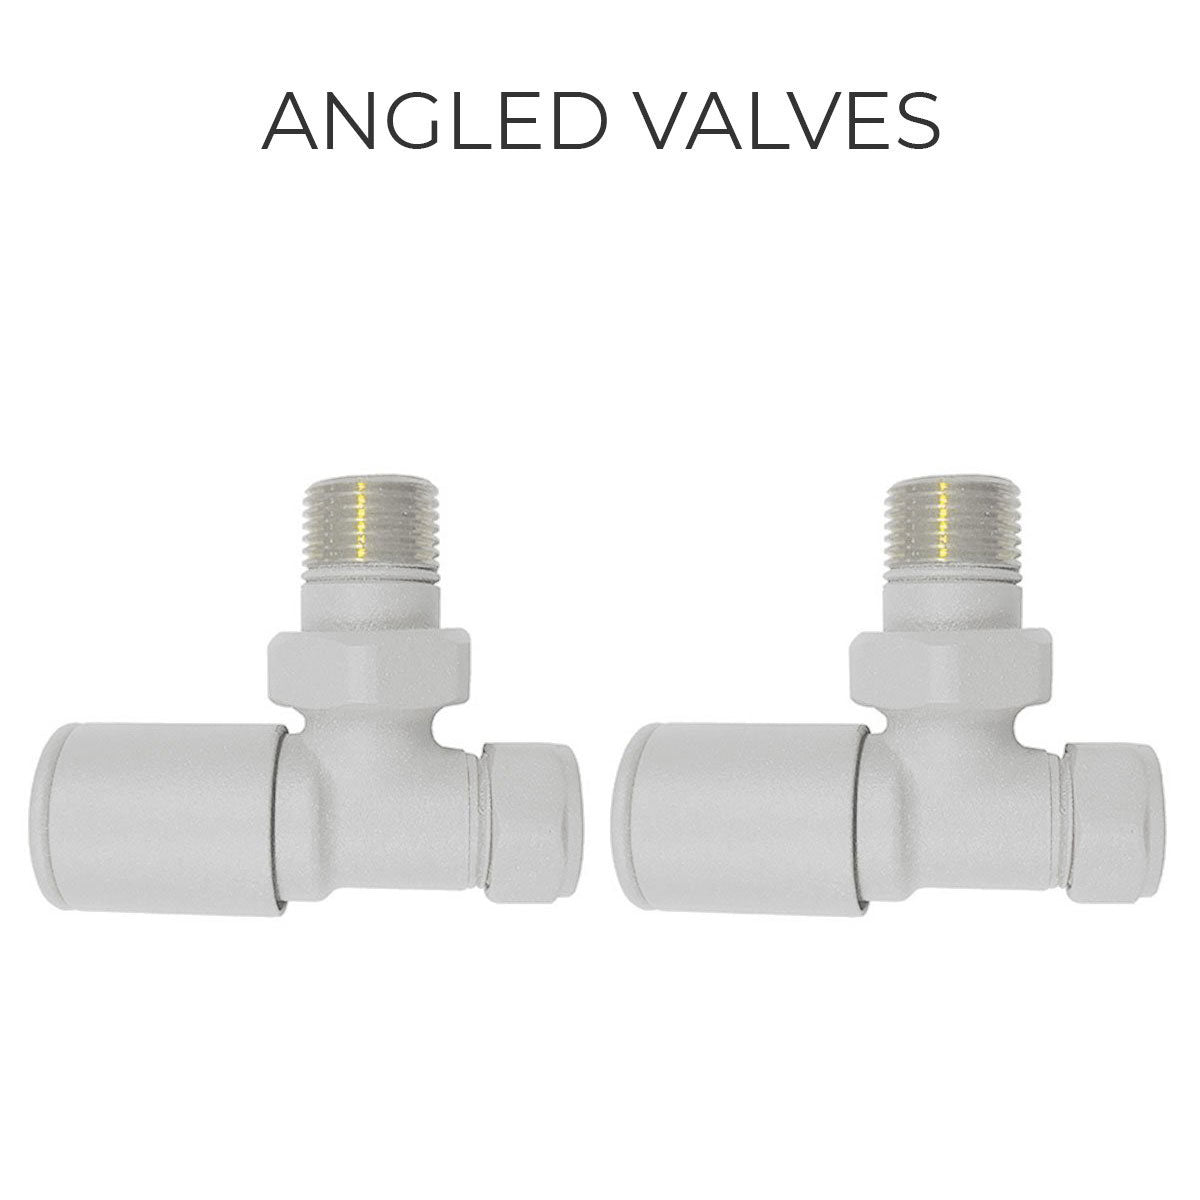 Deluxe Venice round angled rad valves white